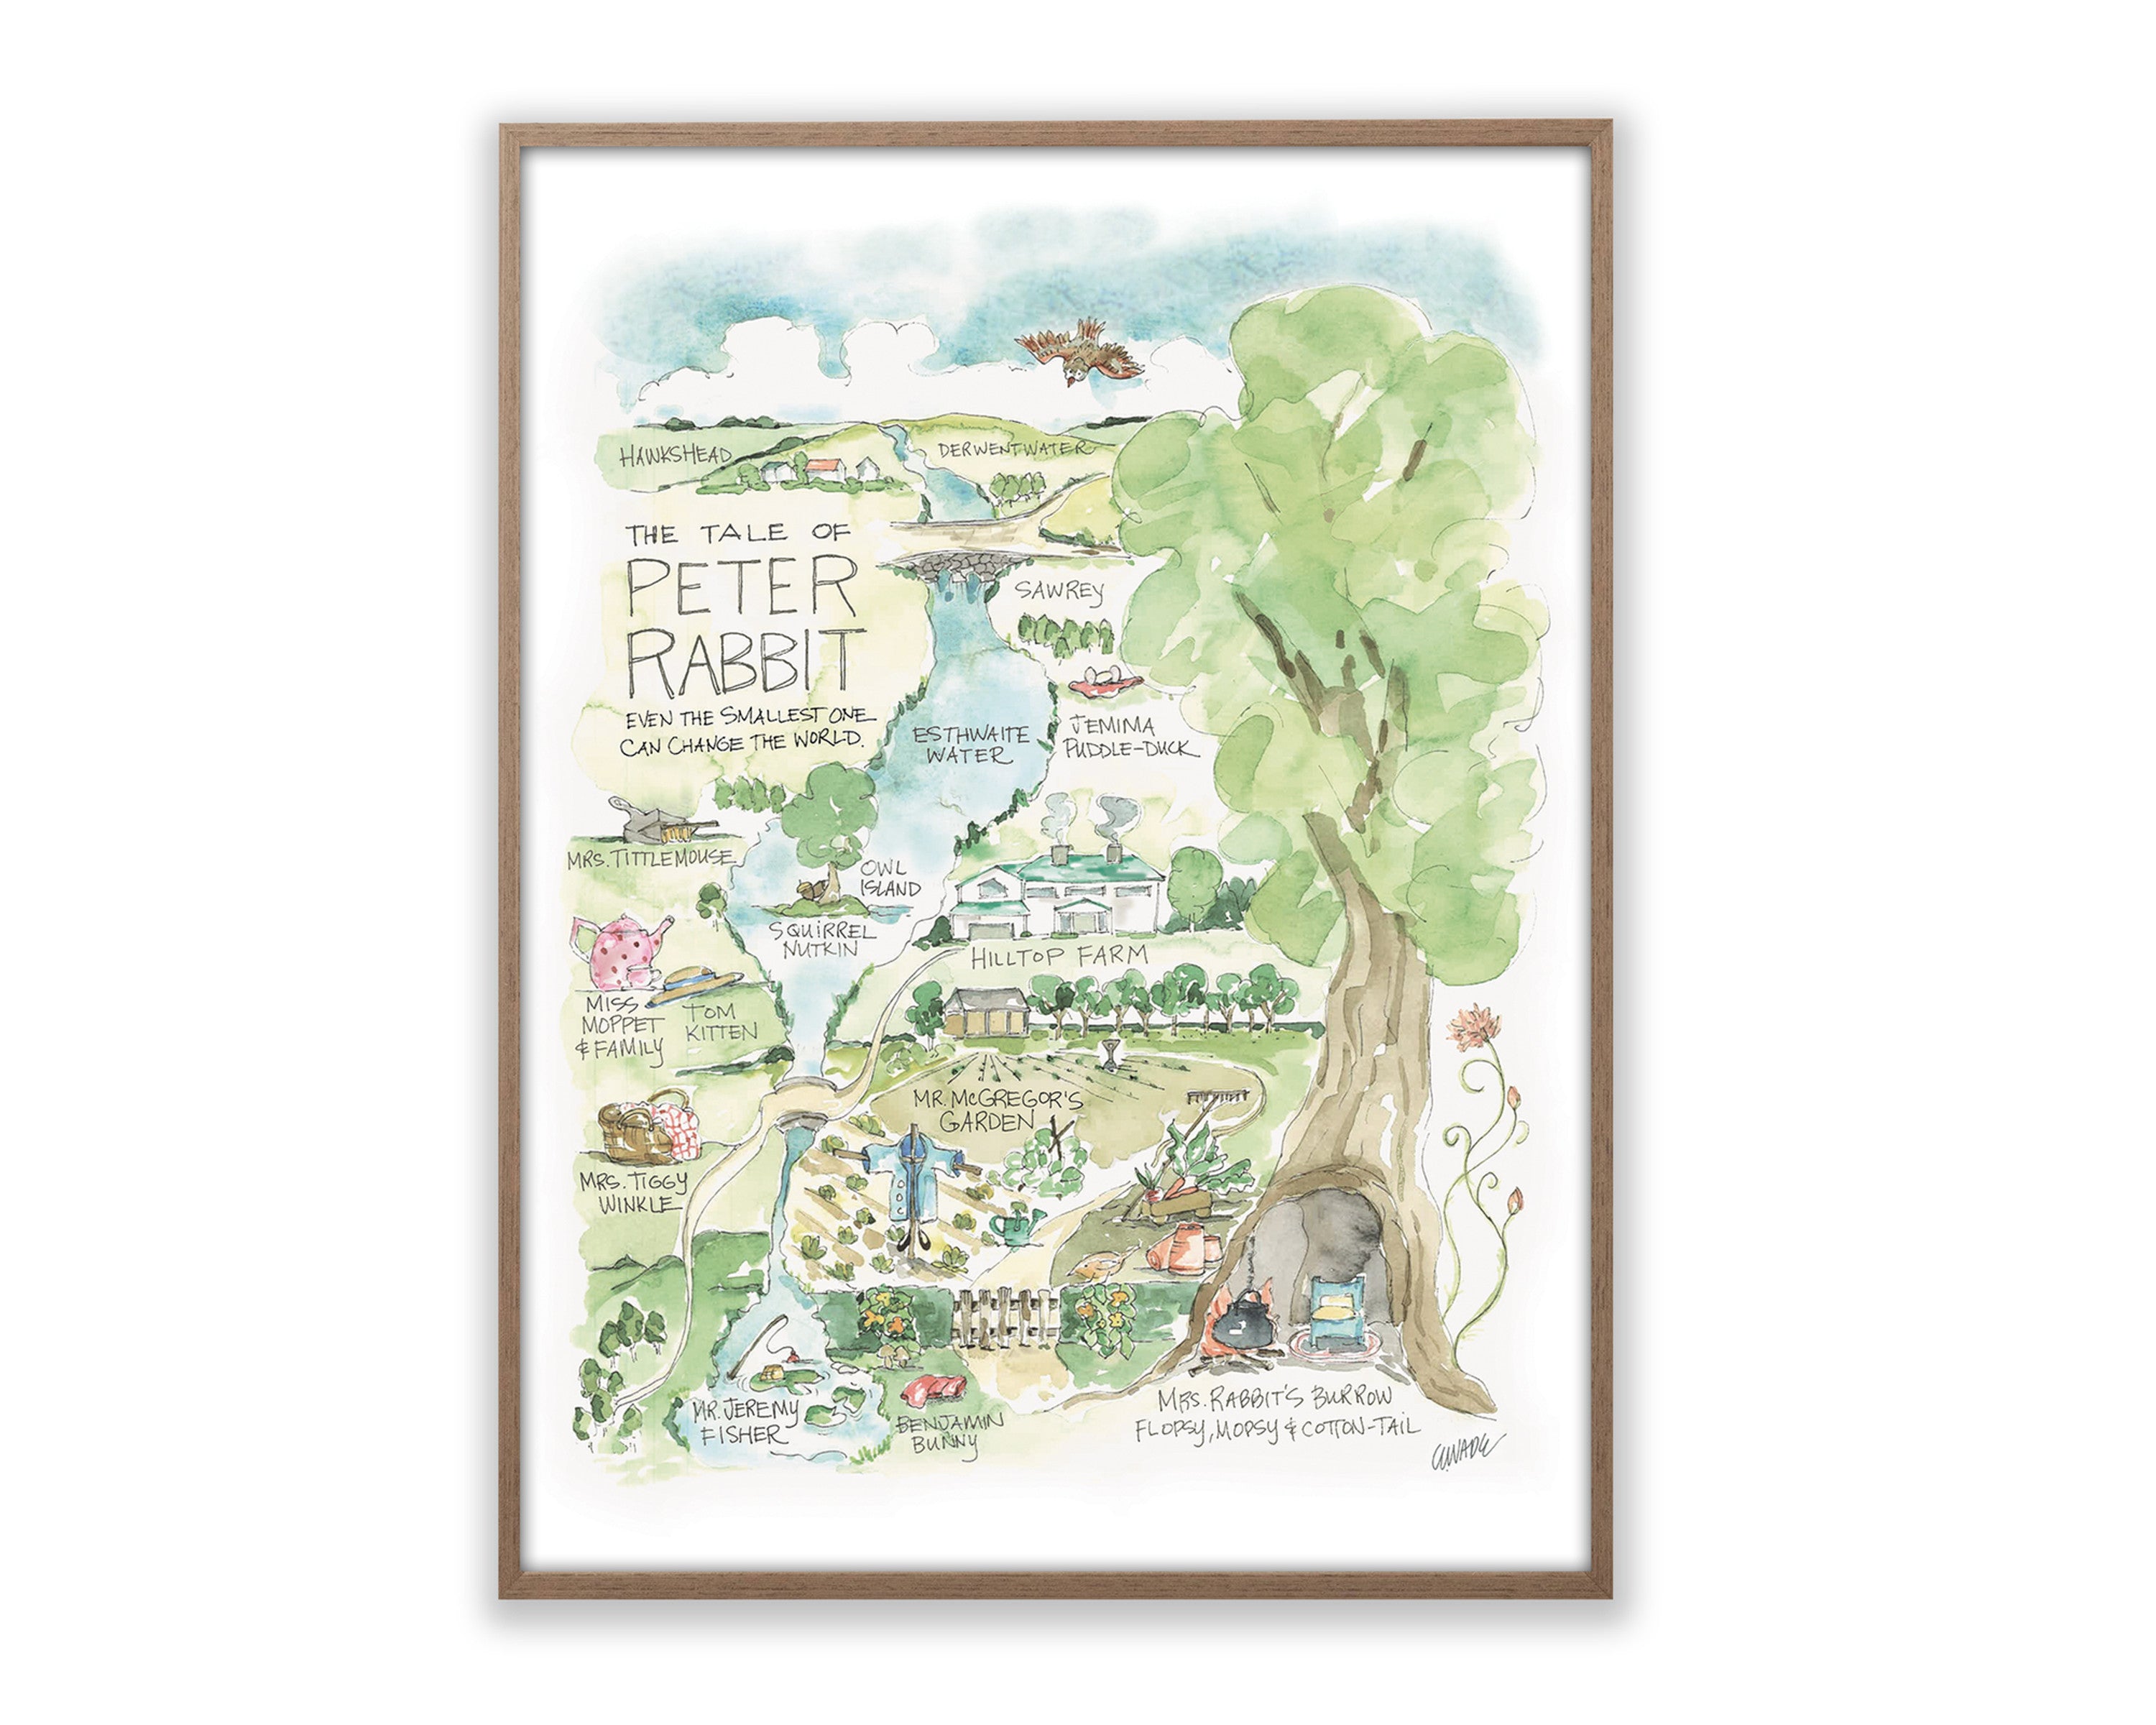 The Tale of Jeremy Beatrix Potter Wall Decor Art Print Poster (16x20)